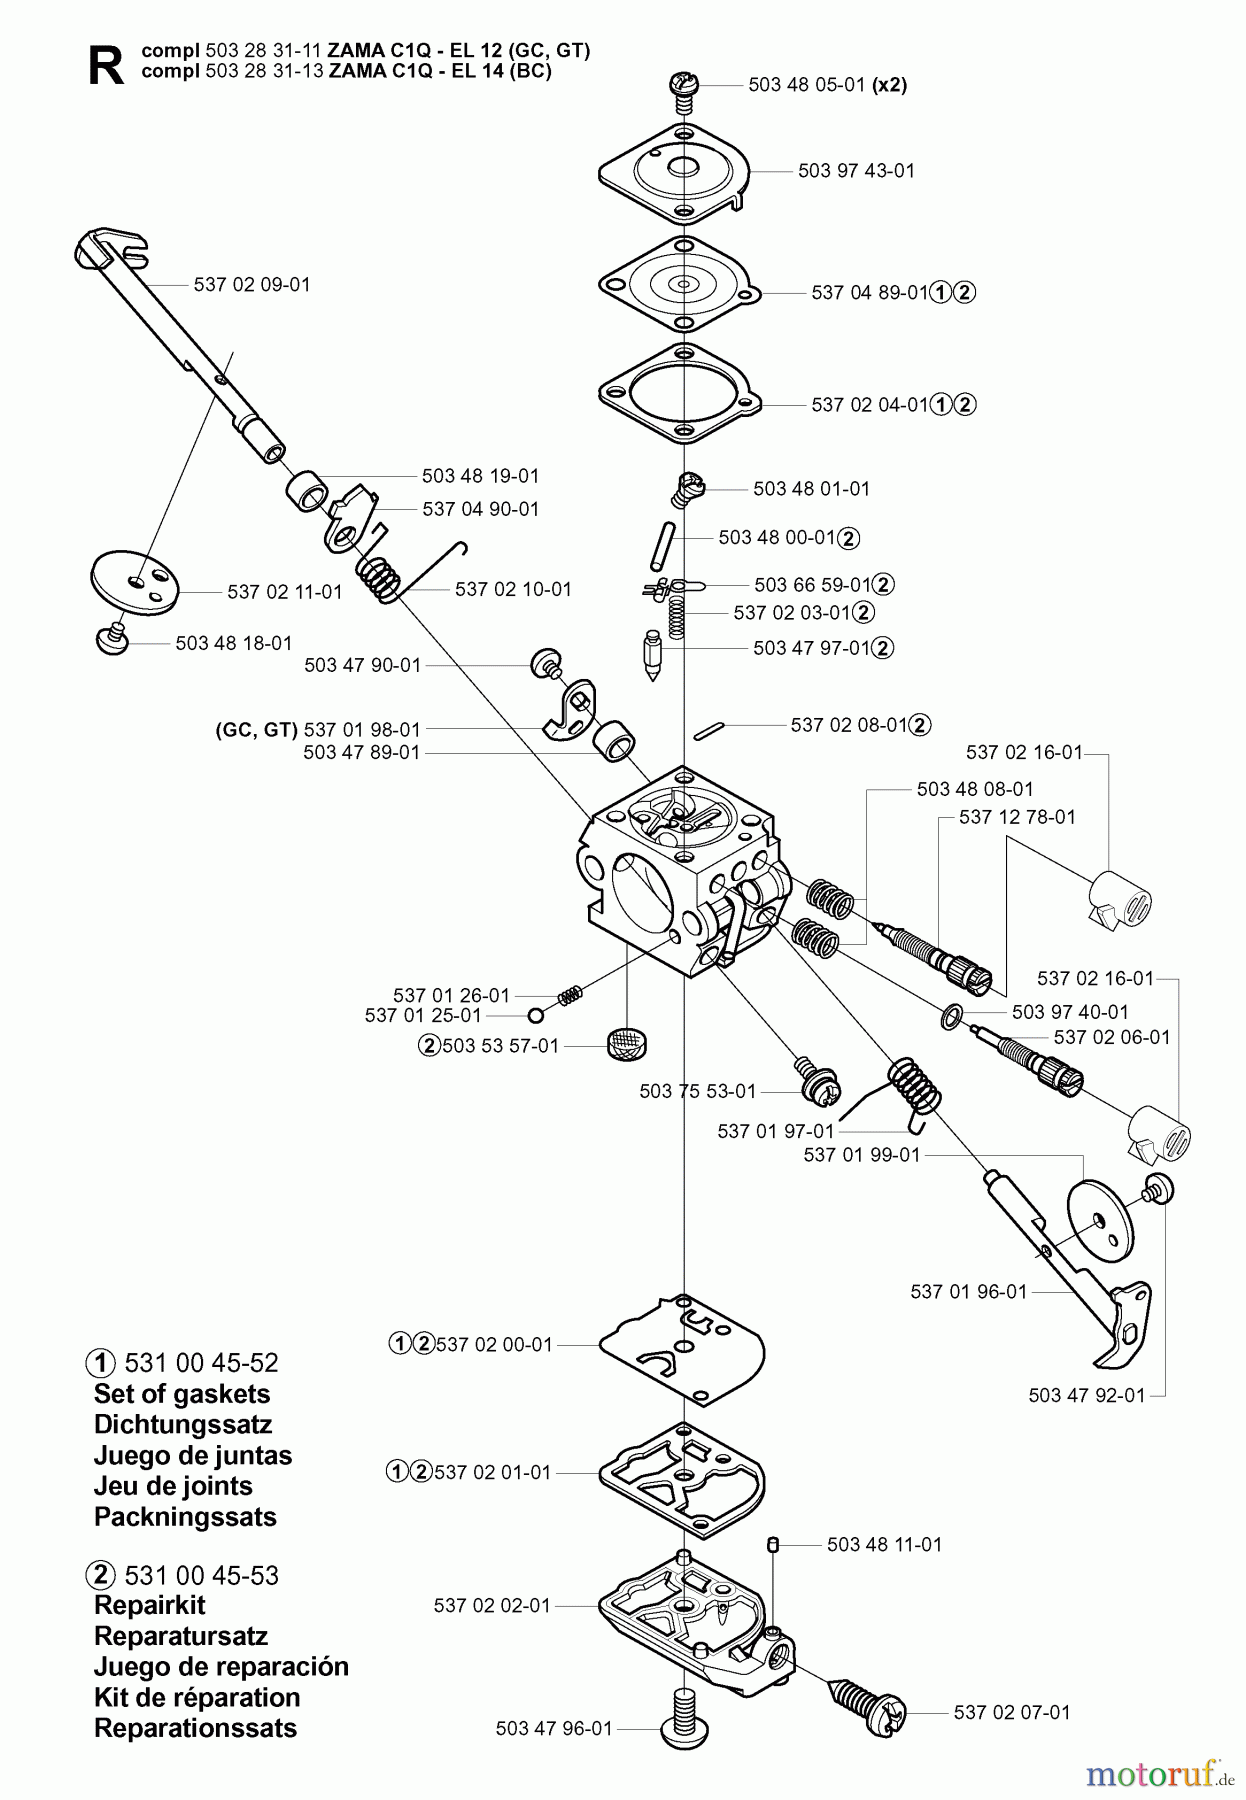  Jonsered Motorsensen, Trimmer GC2125 - Jonsered String/Brush Trimmer (2004-01) CARBURETOR DETAILS